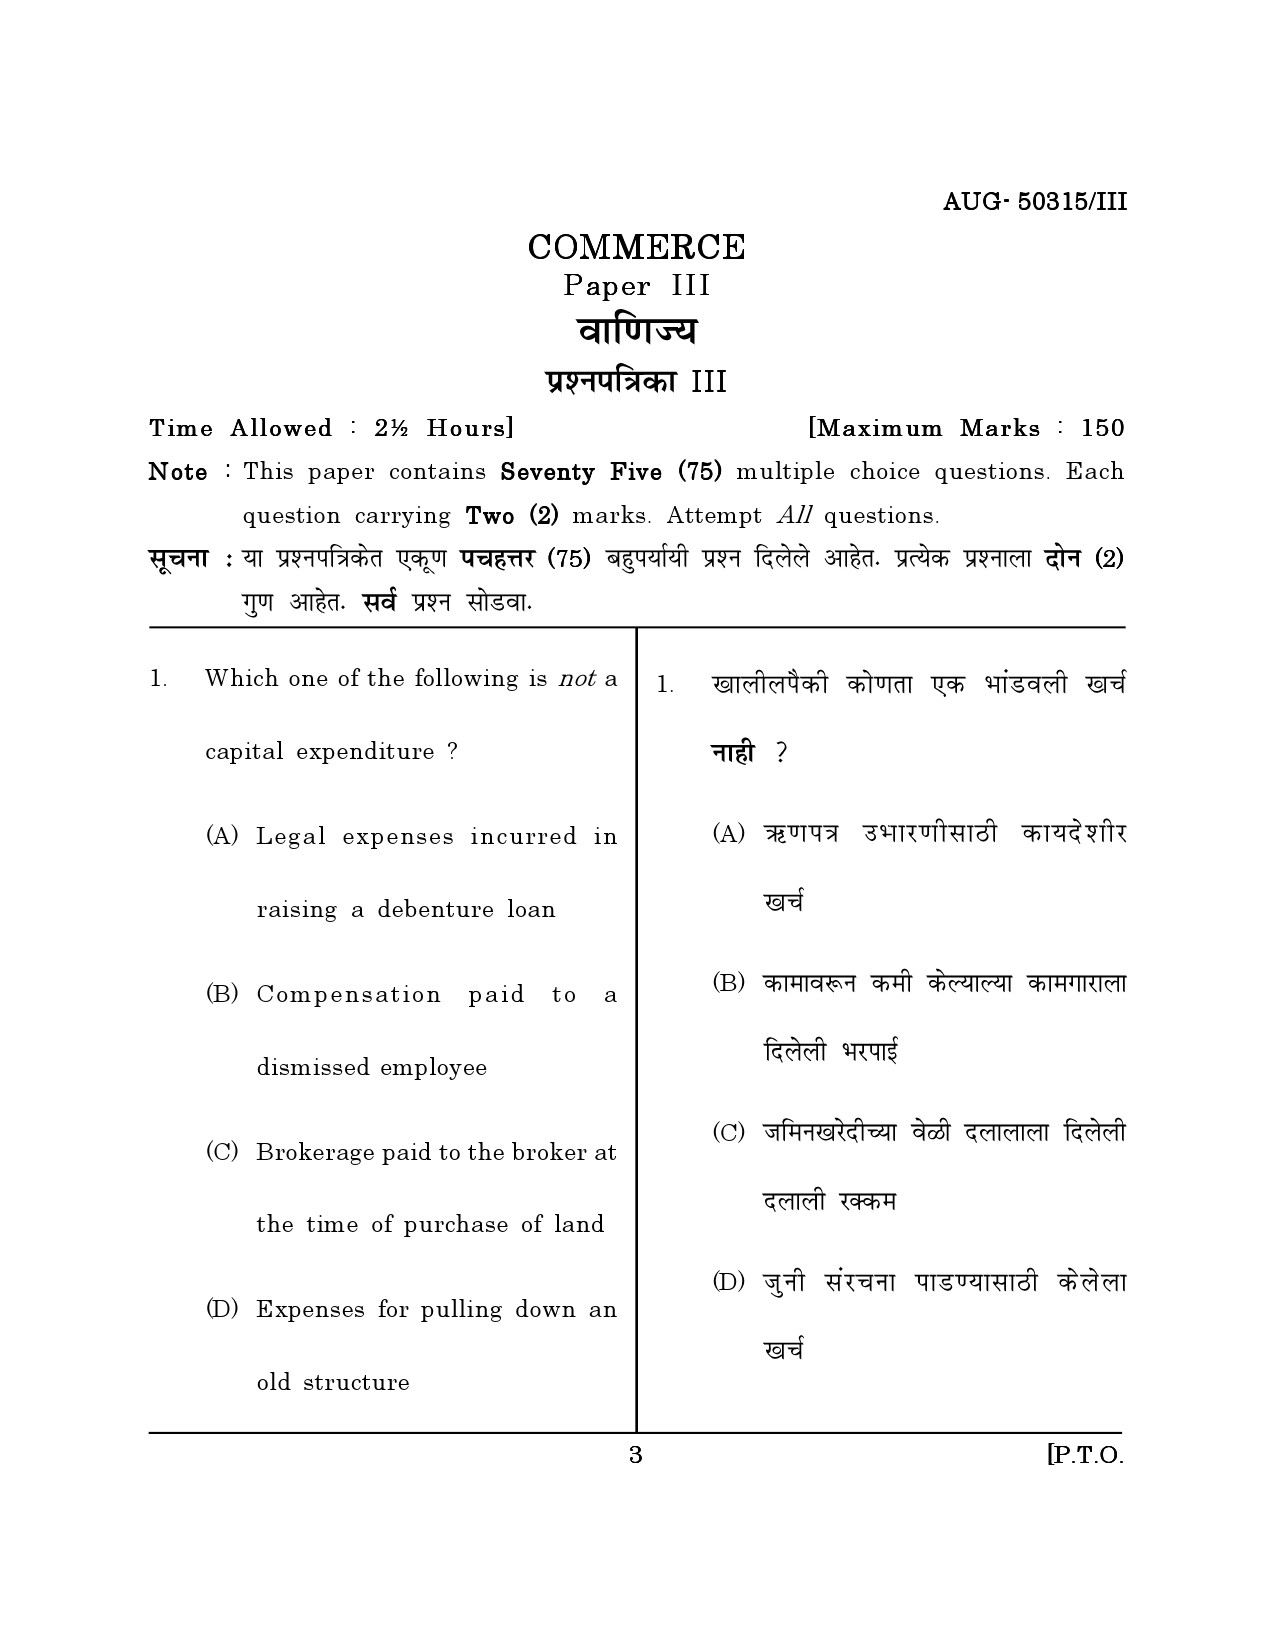 Maharashtra SET Commerce Question Paper III August 2015 2